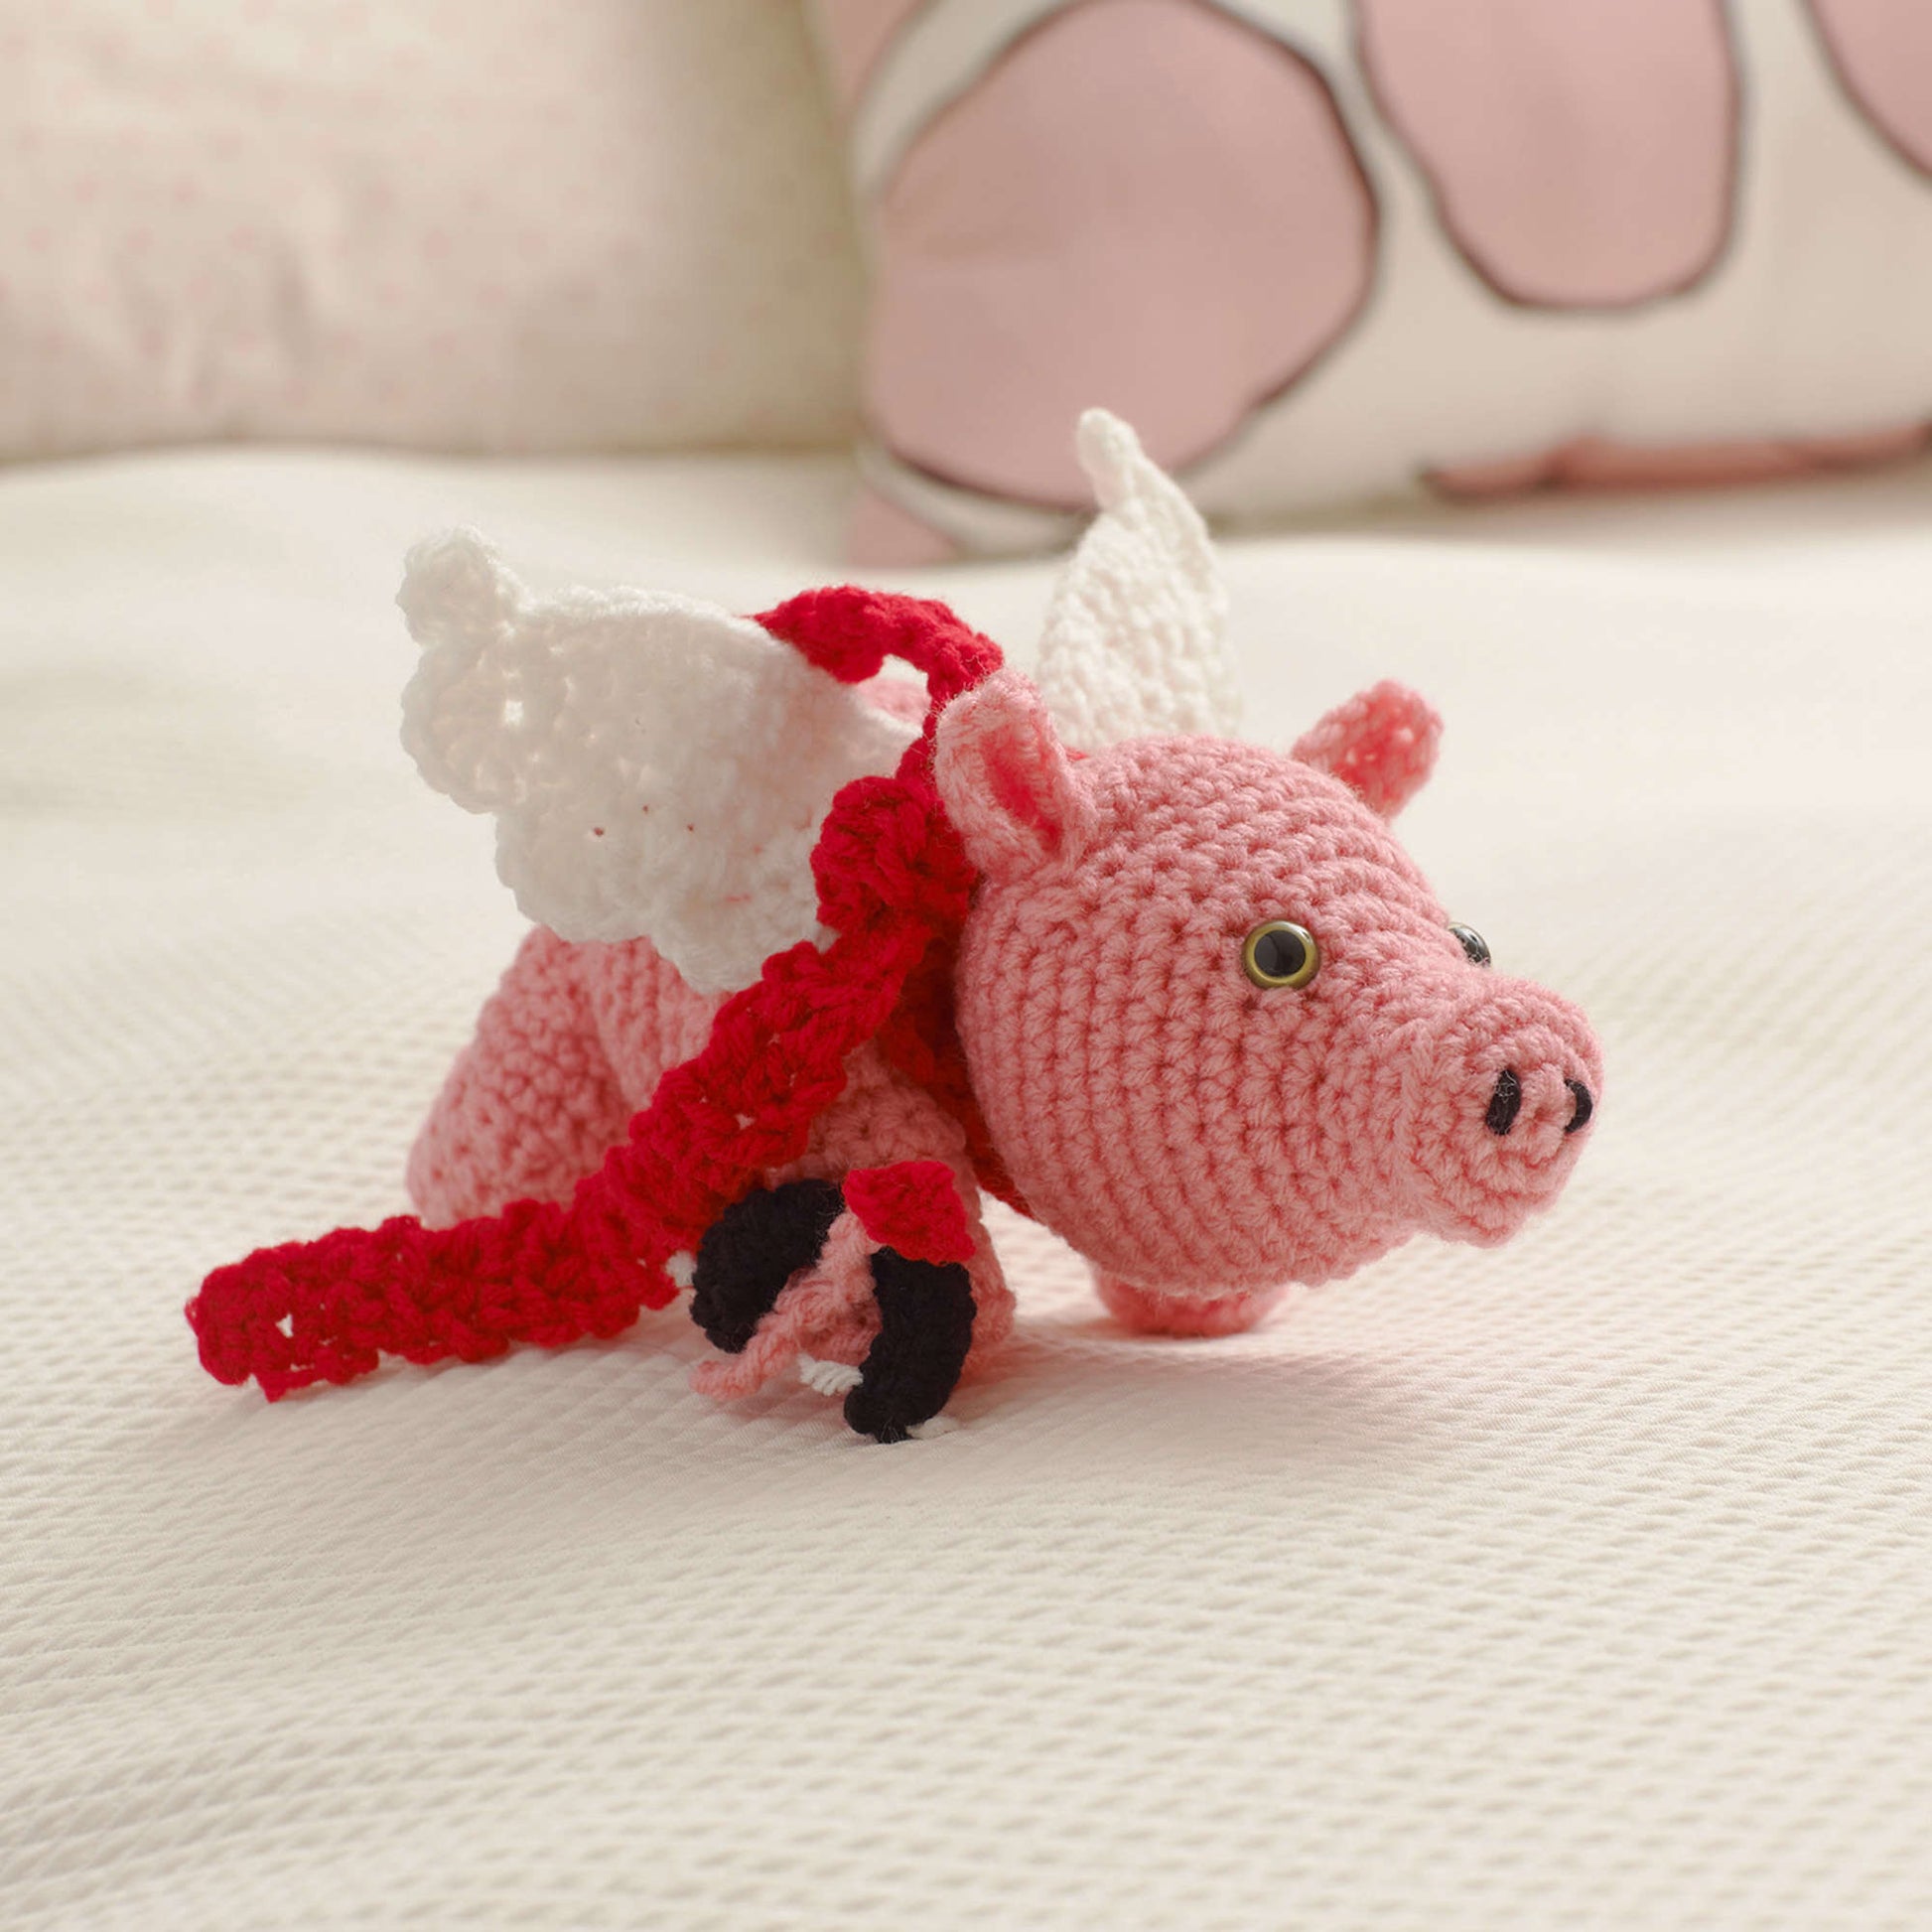 Free Red Heart Cu-Pig Crochet Pattern